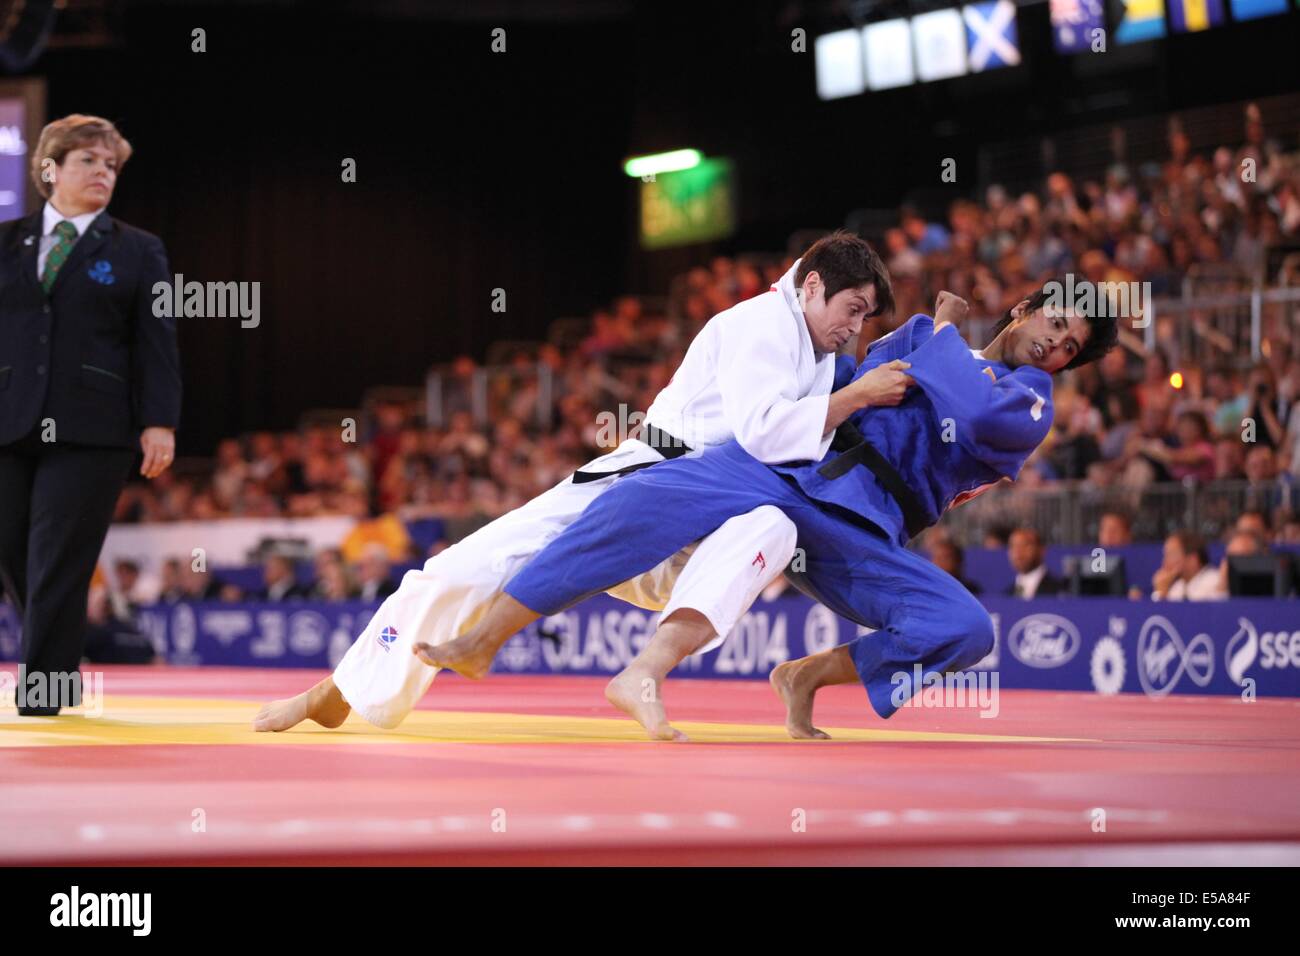 Glasgow, Scotland, UK. 25th July 2014. Commonwealth Games day 2, Judo